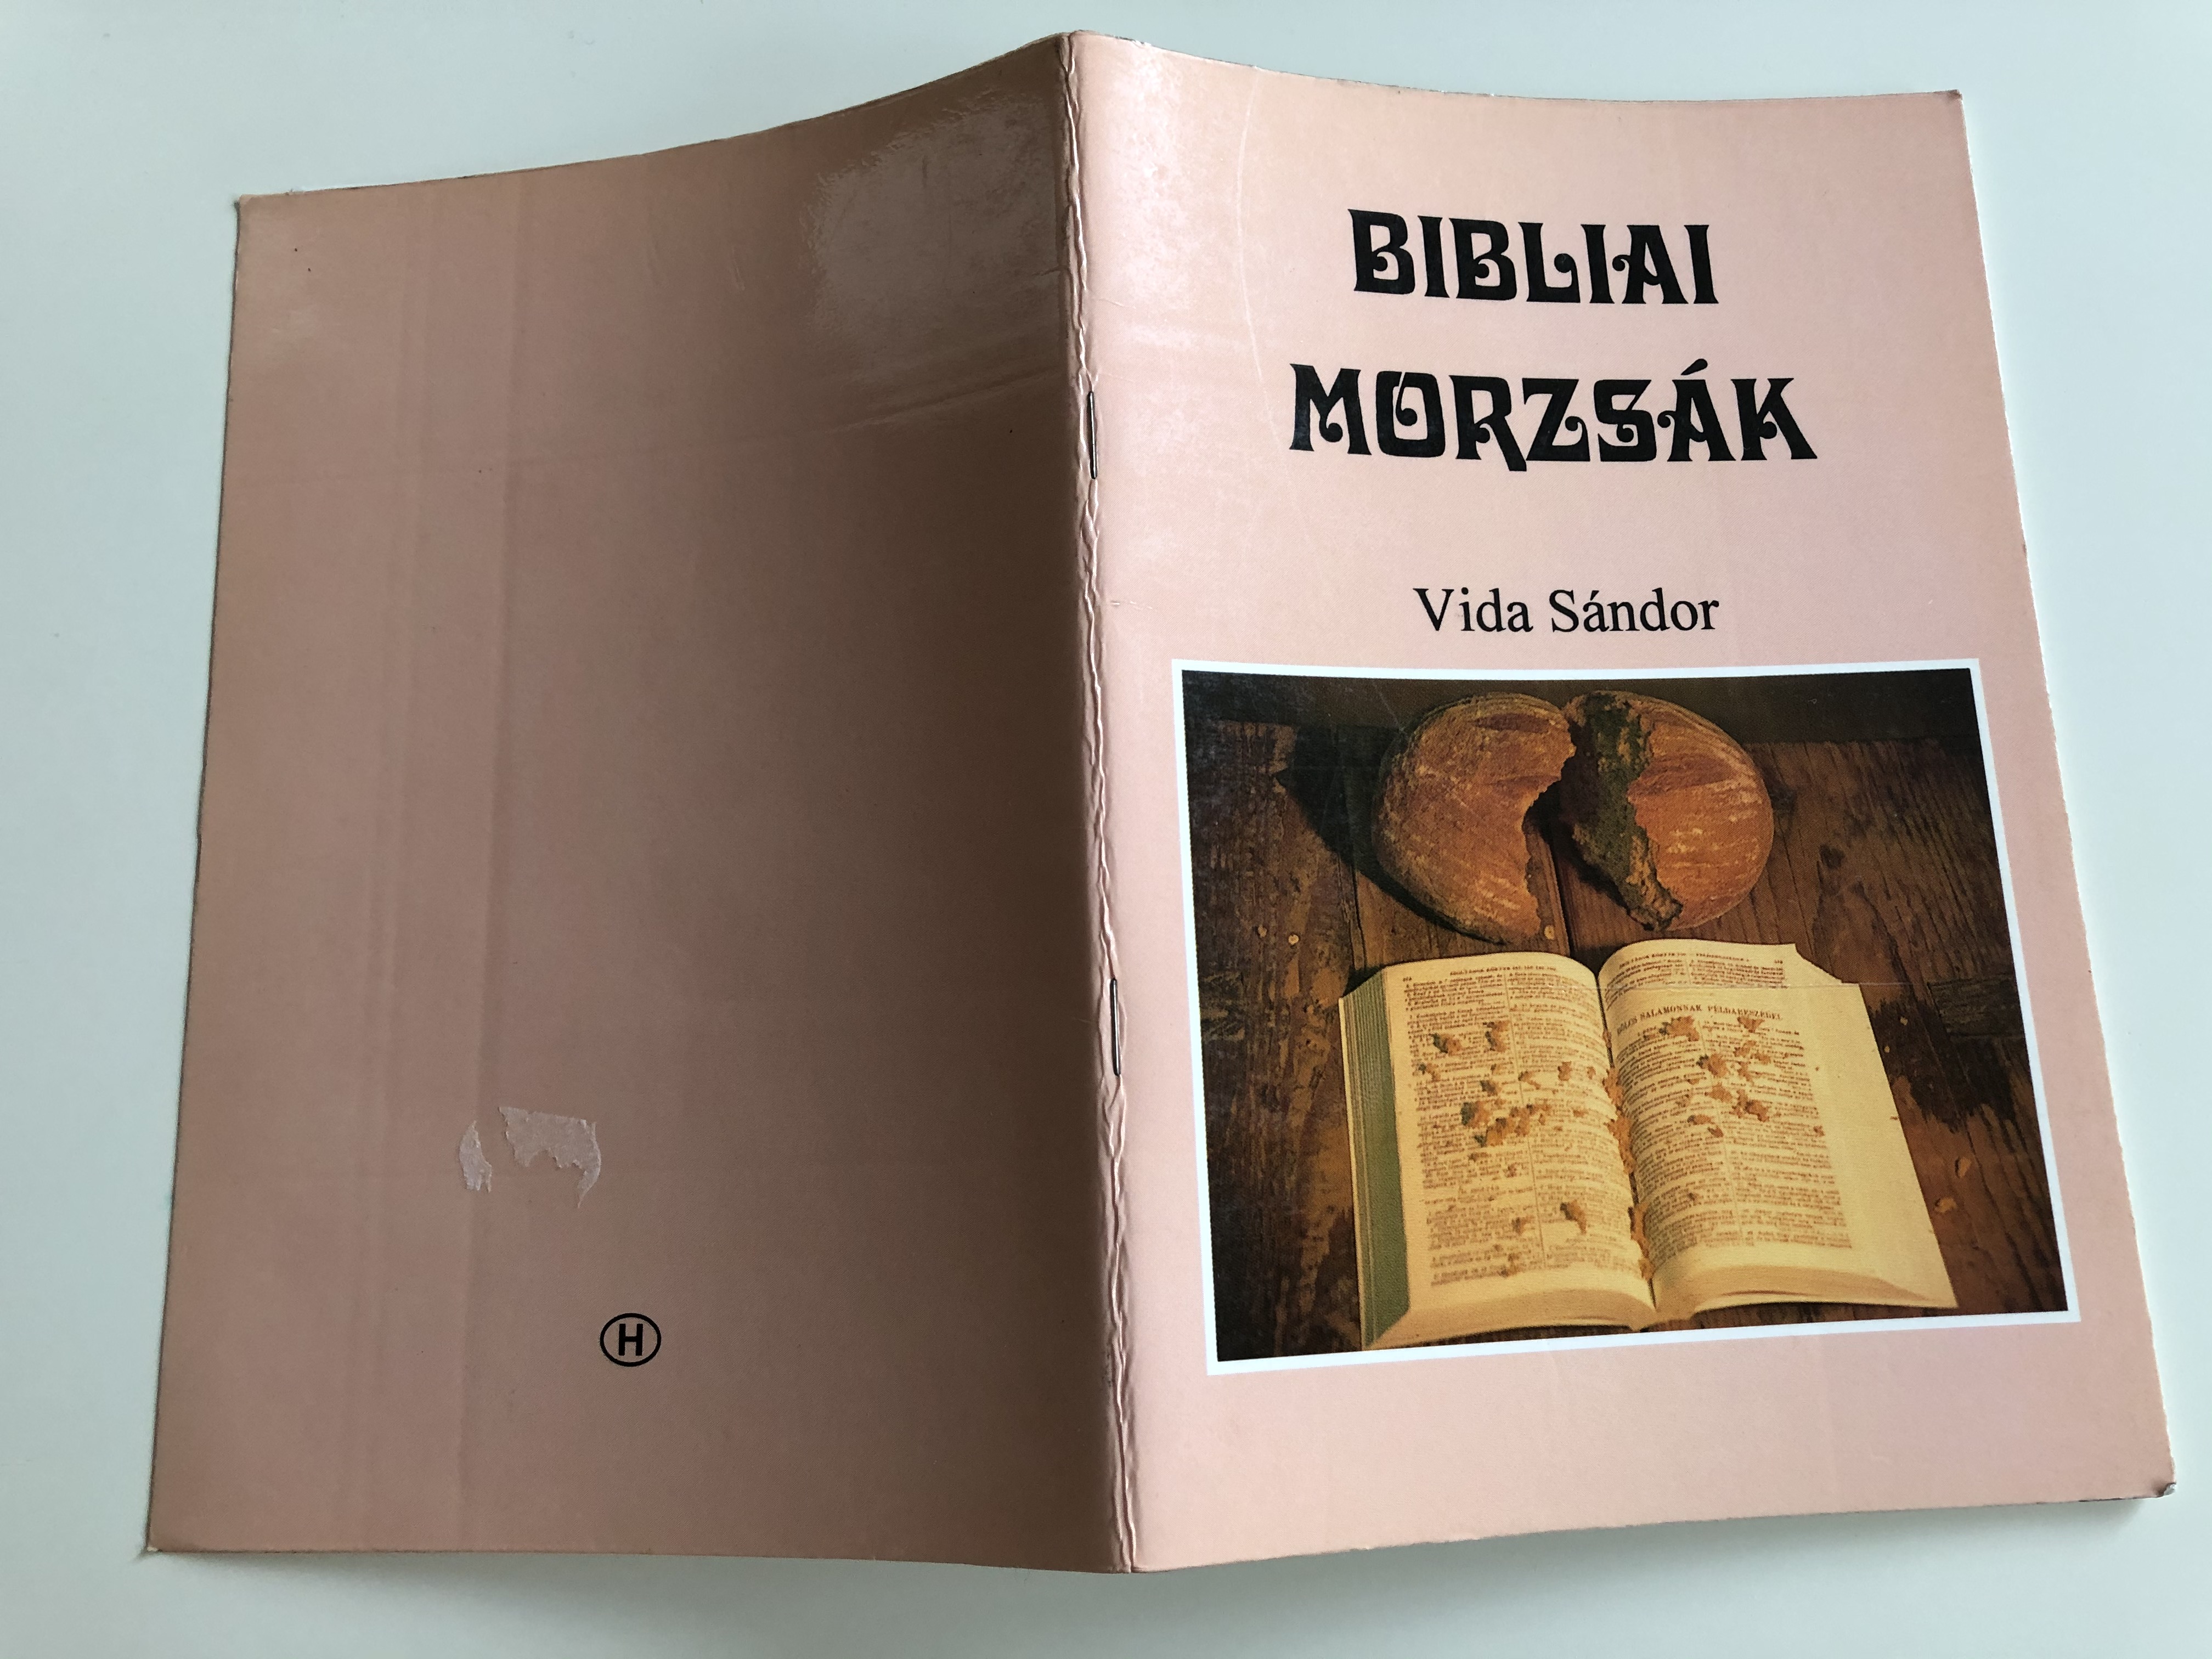 Bibliai morzsák by Vida Sándor 1